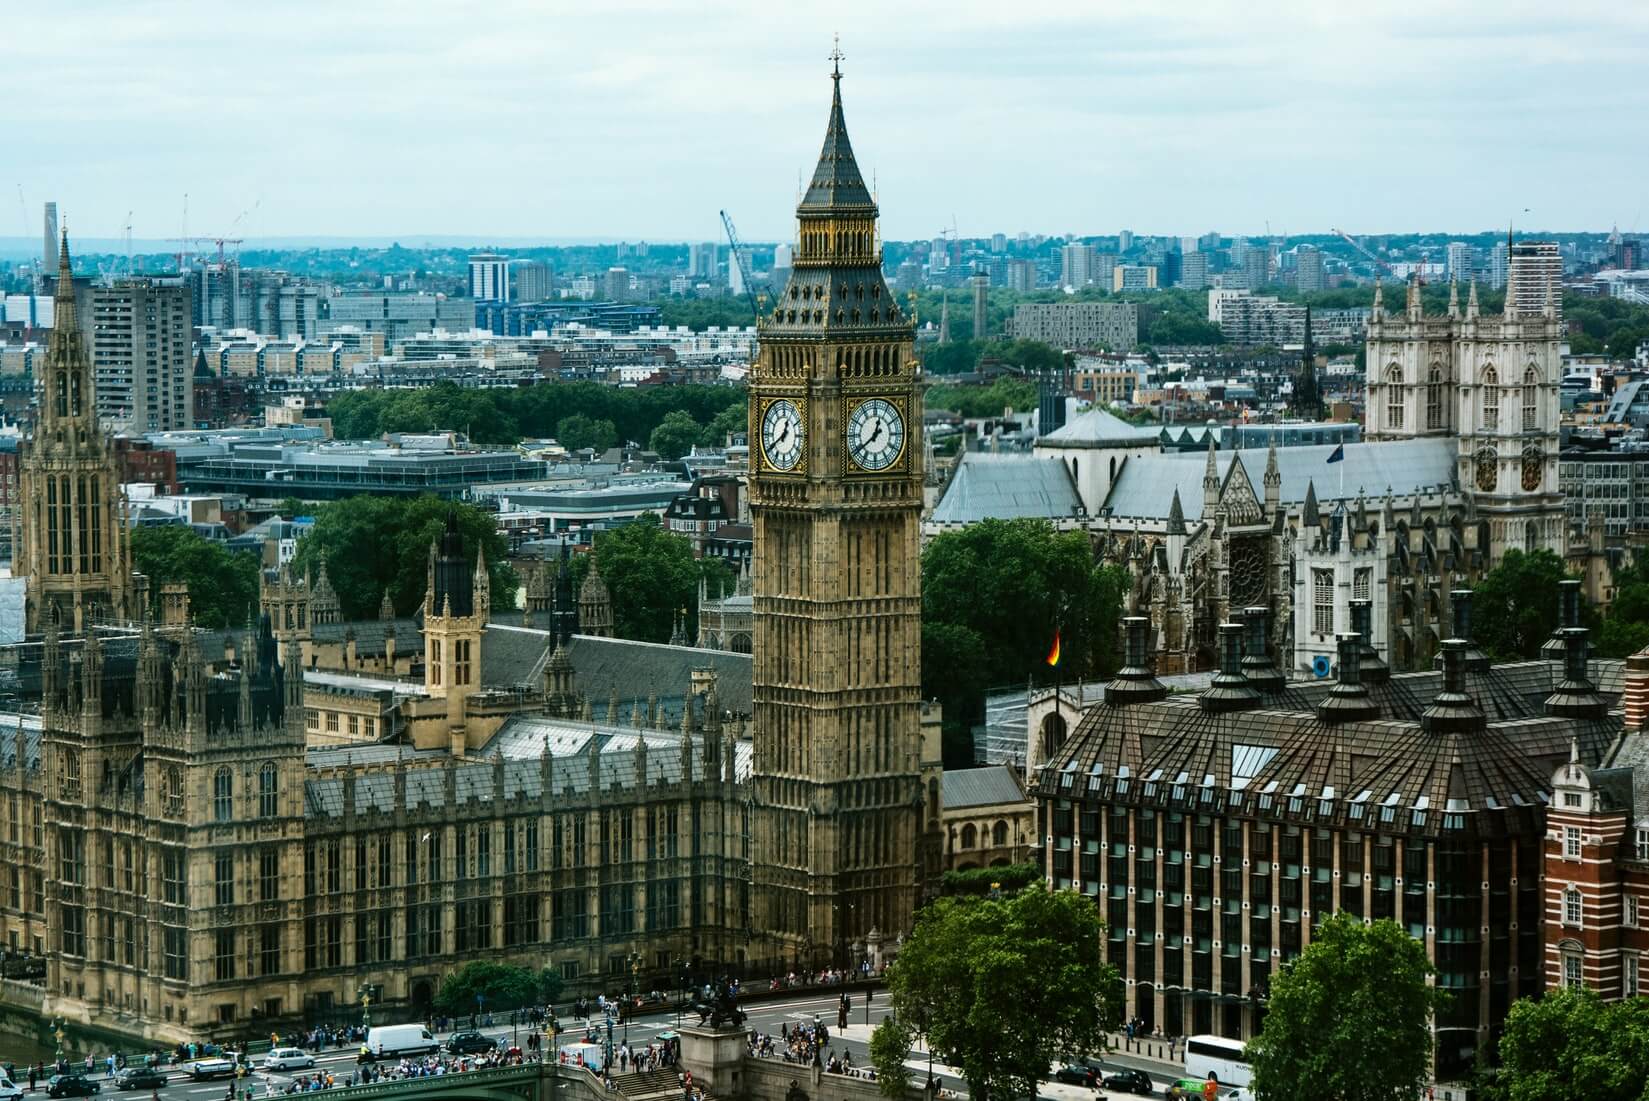 UK's Architectural Marvel - Big Ben & London's Cityscape